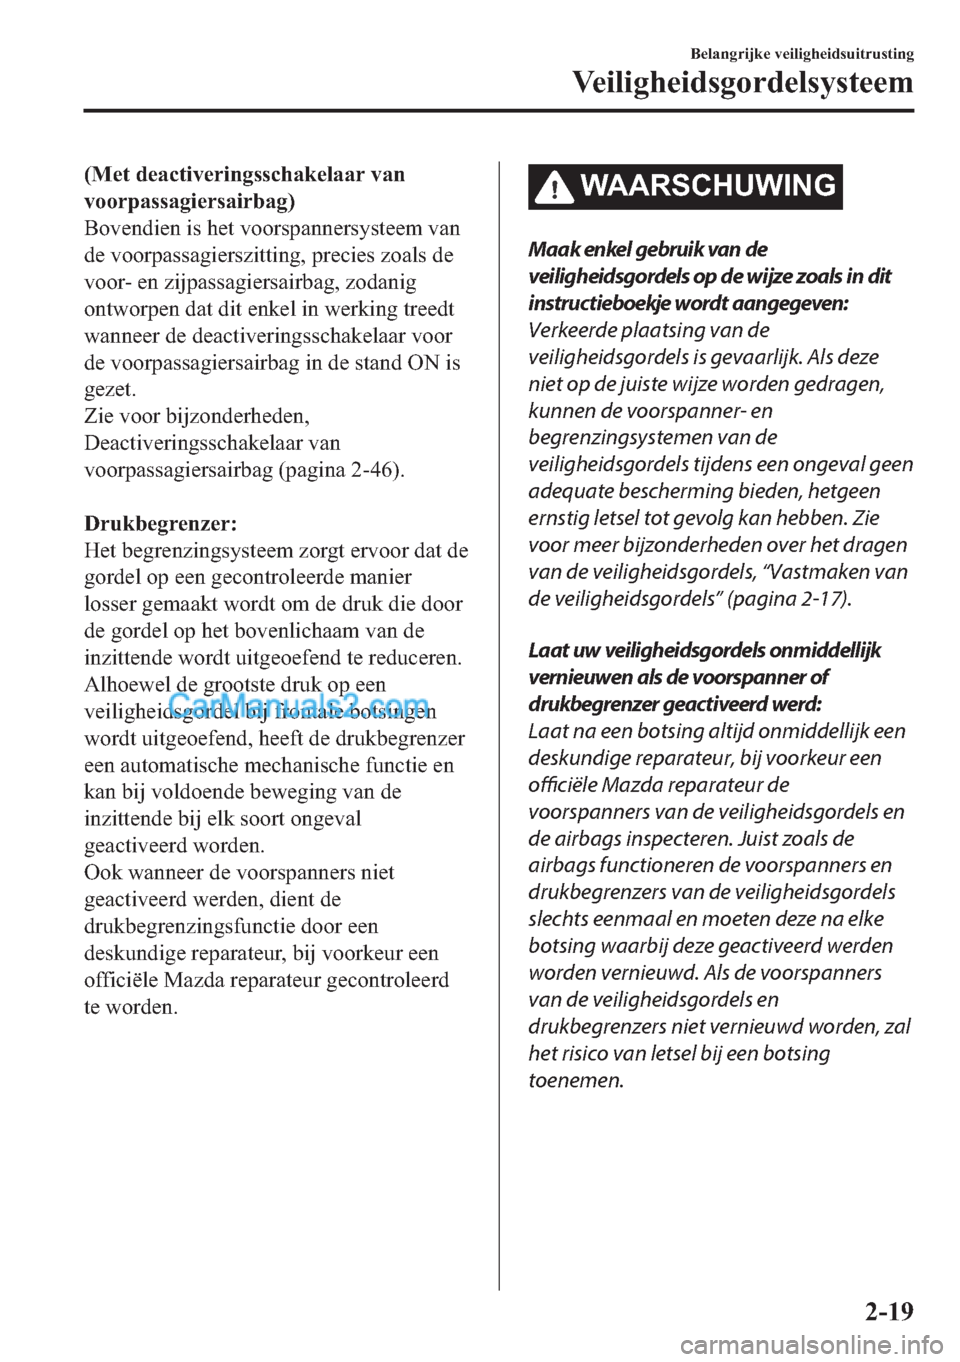 MAZDA MODEL 2 2018  Handleiding (in Dutch) ��0�H�W��G�H�D�F�W�L�Y�H�U�L�Q�J�V�V�F�K�D�N�H�O�D�D�U��Y�D�Q
�Y�R�R�U�S�D�V�V�D�J�L�H�U�V�D�L�U�E�D�J�
�%�R�Y�H�Q�G�L�H�Q��L�V��K�H�W��Y�R�R�U�V�S�D�Q�Q�H�U�V�\�V�W�H�H�P��Y�D�Q
�G�H��Y�R�R�